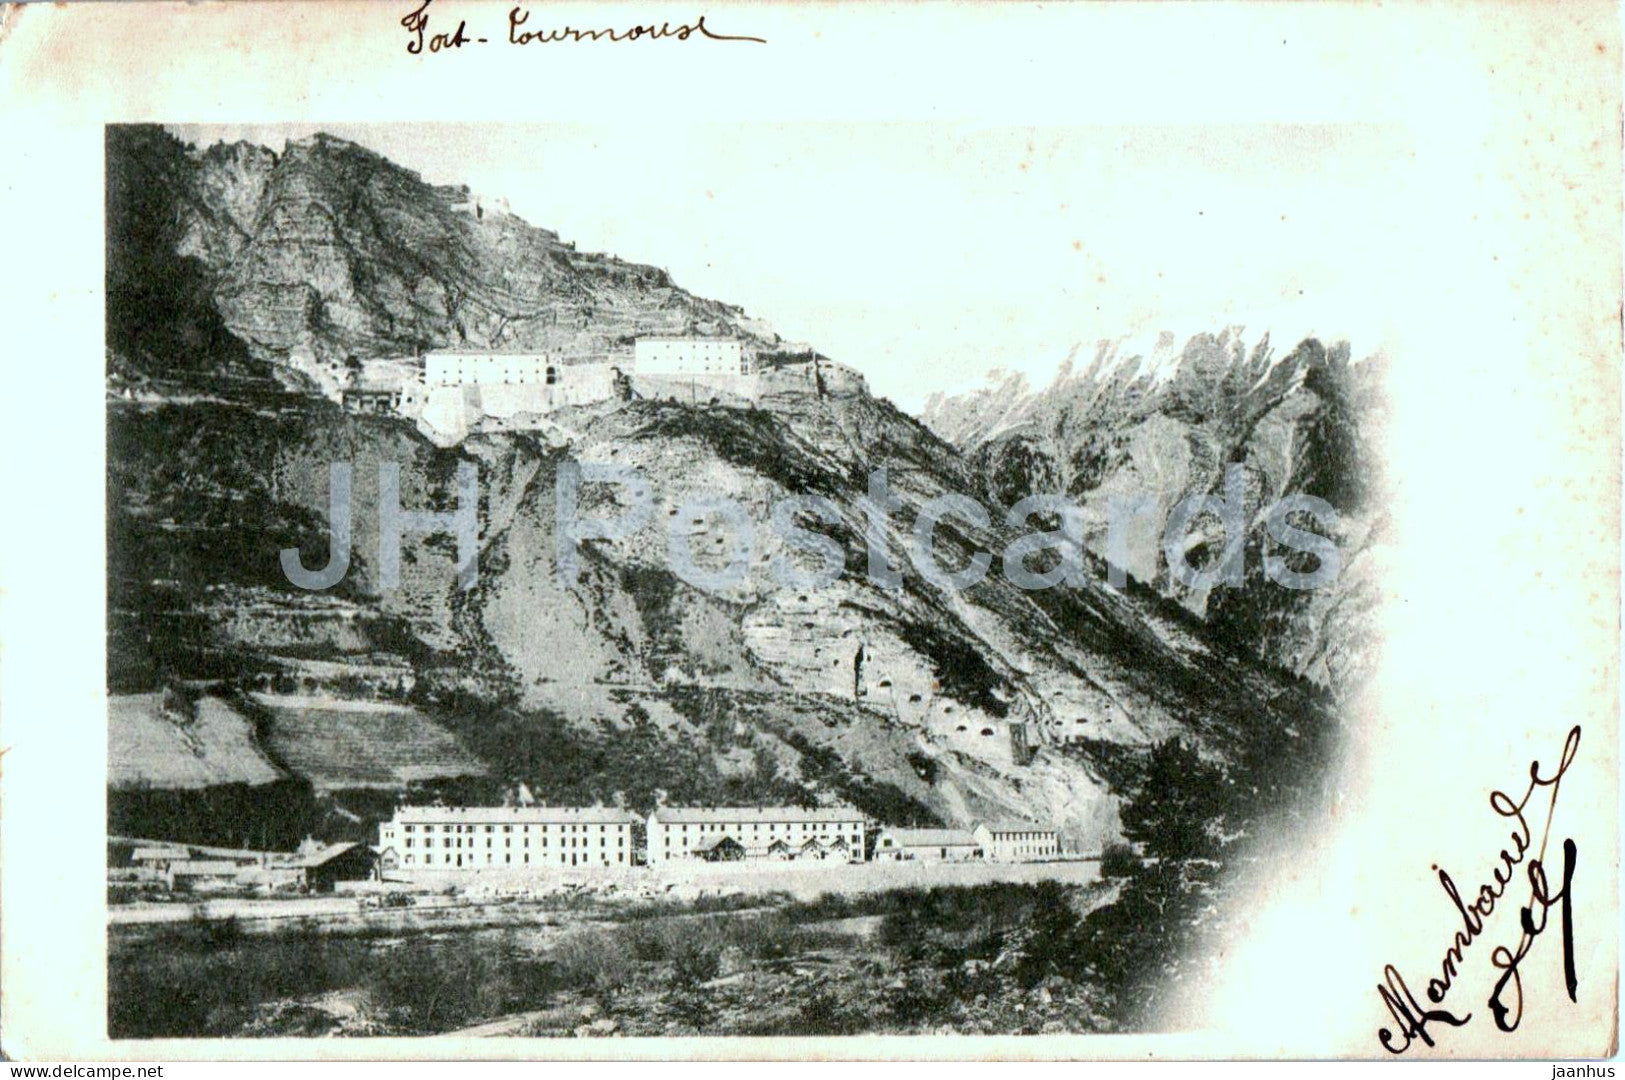 Fort Tournoux - old postcard - France - used - JH Postcards